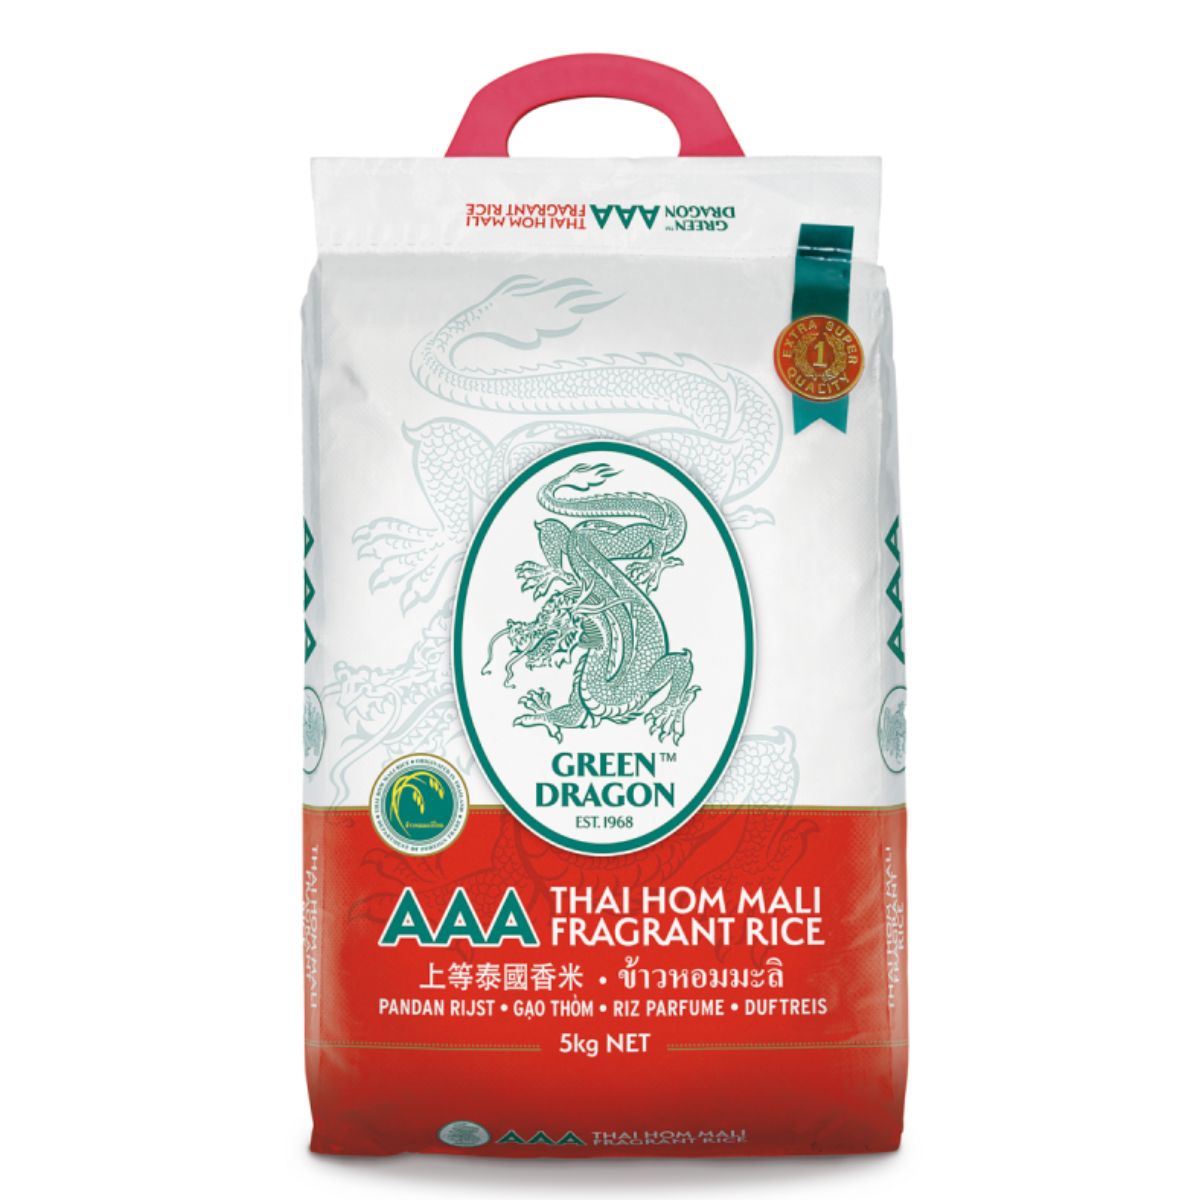 A bag of Green Dragon - Thai Fragrant Rice - 5kg.